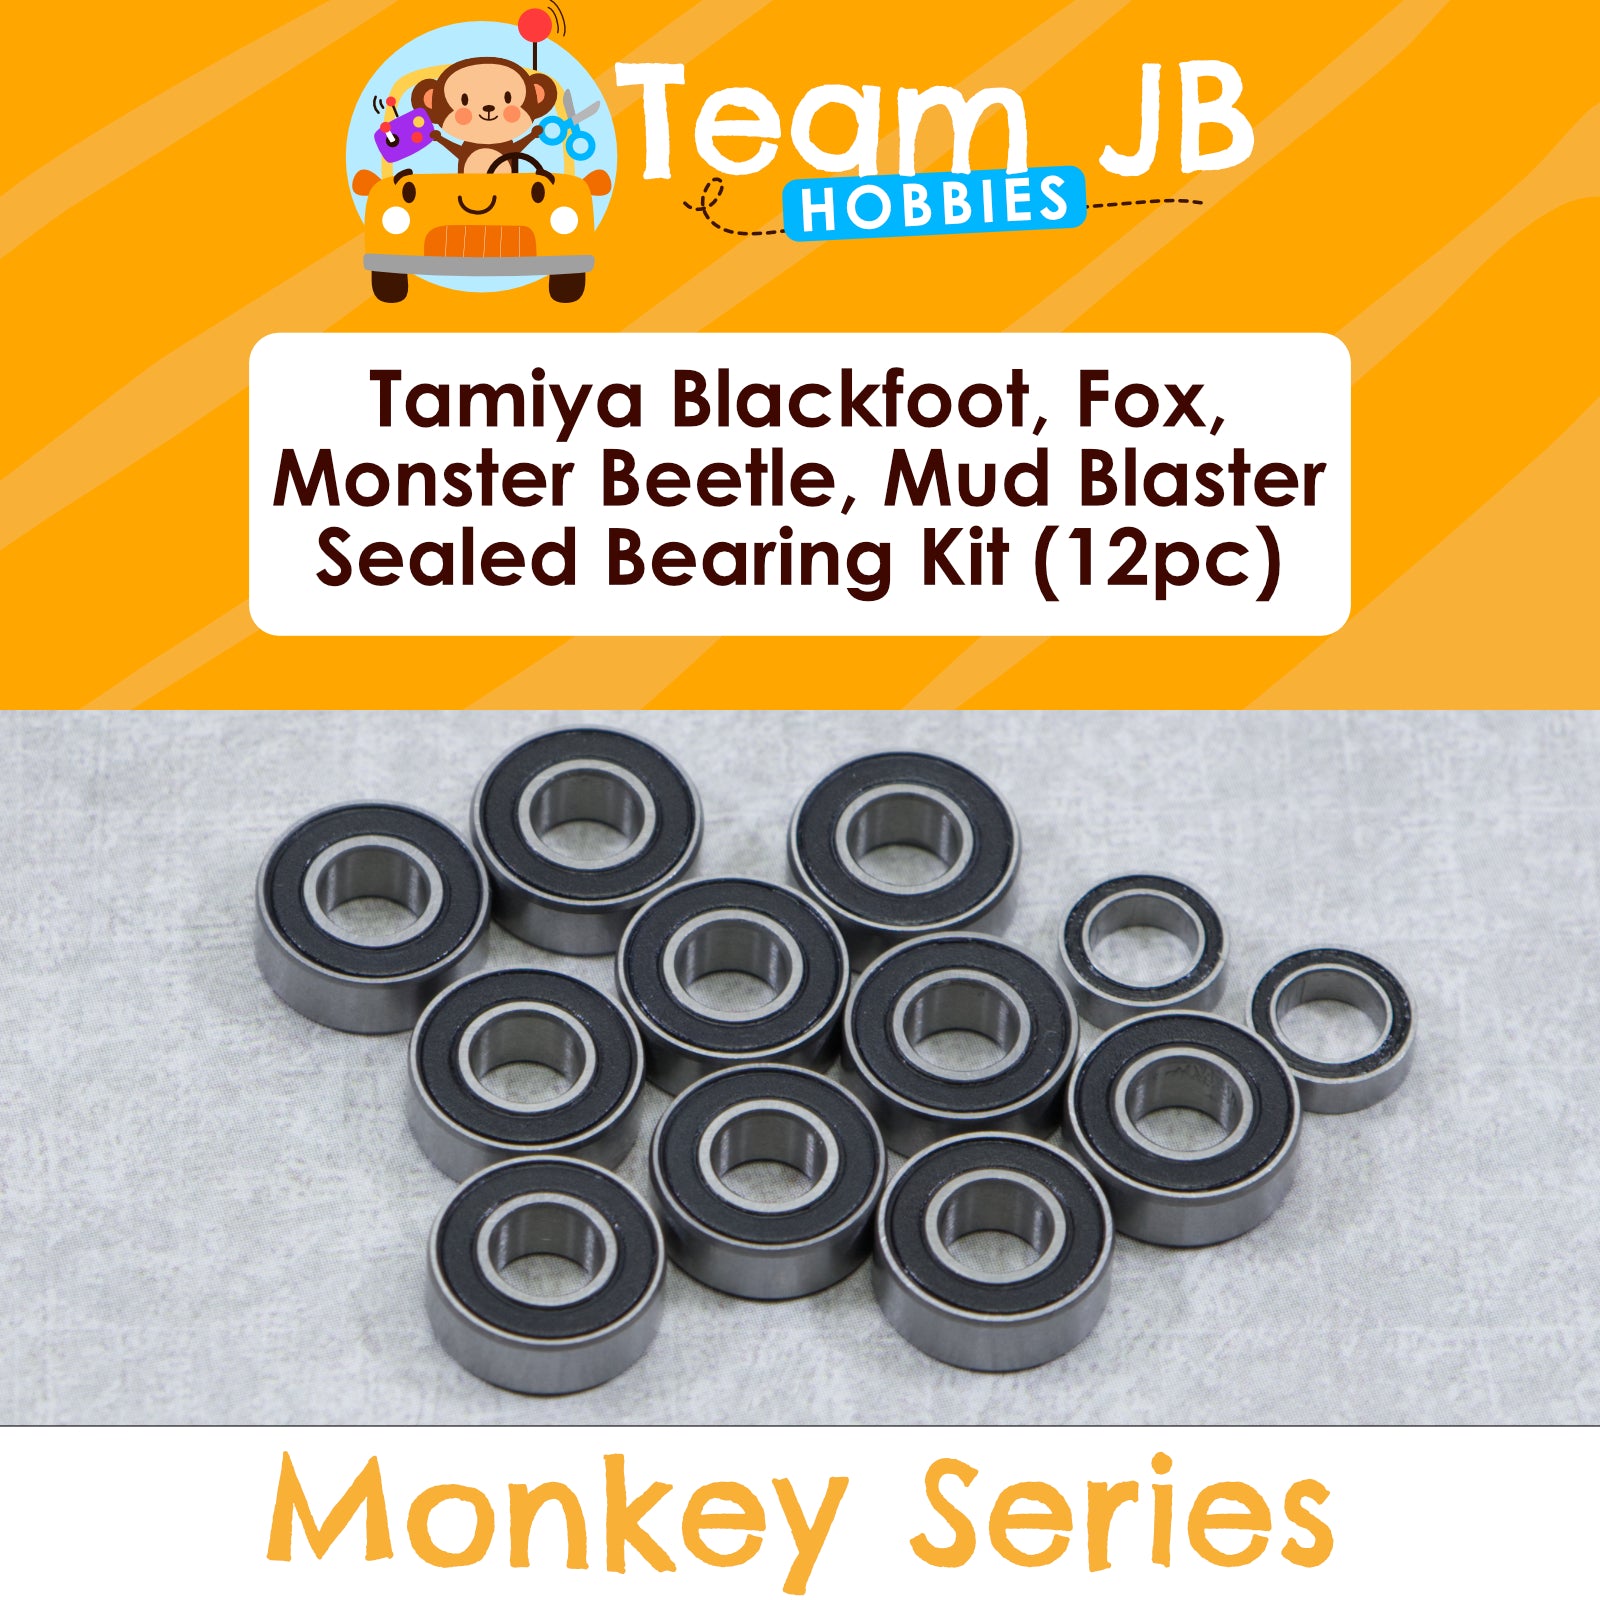 Tamiya Blackfoot, Fox, Monster Beetle, Mud Blaster - Sealed Bearing Kit